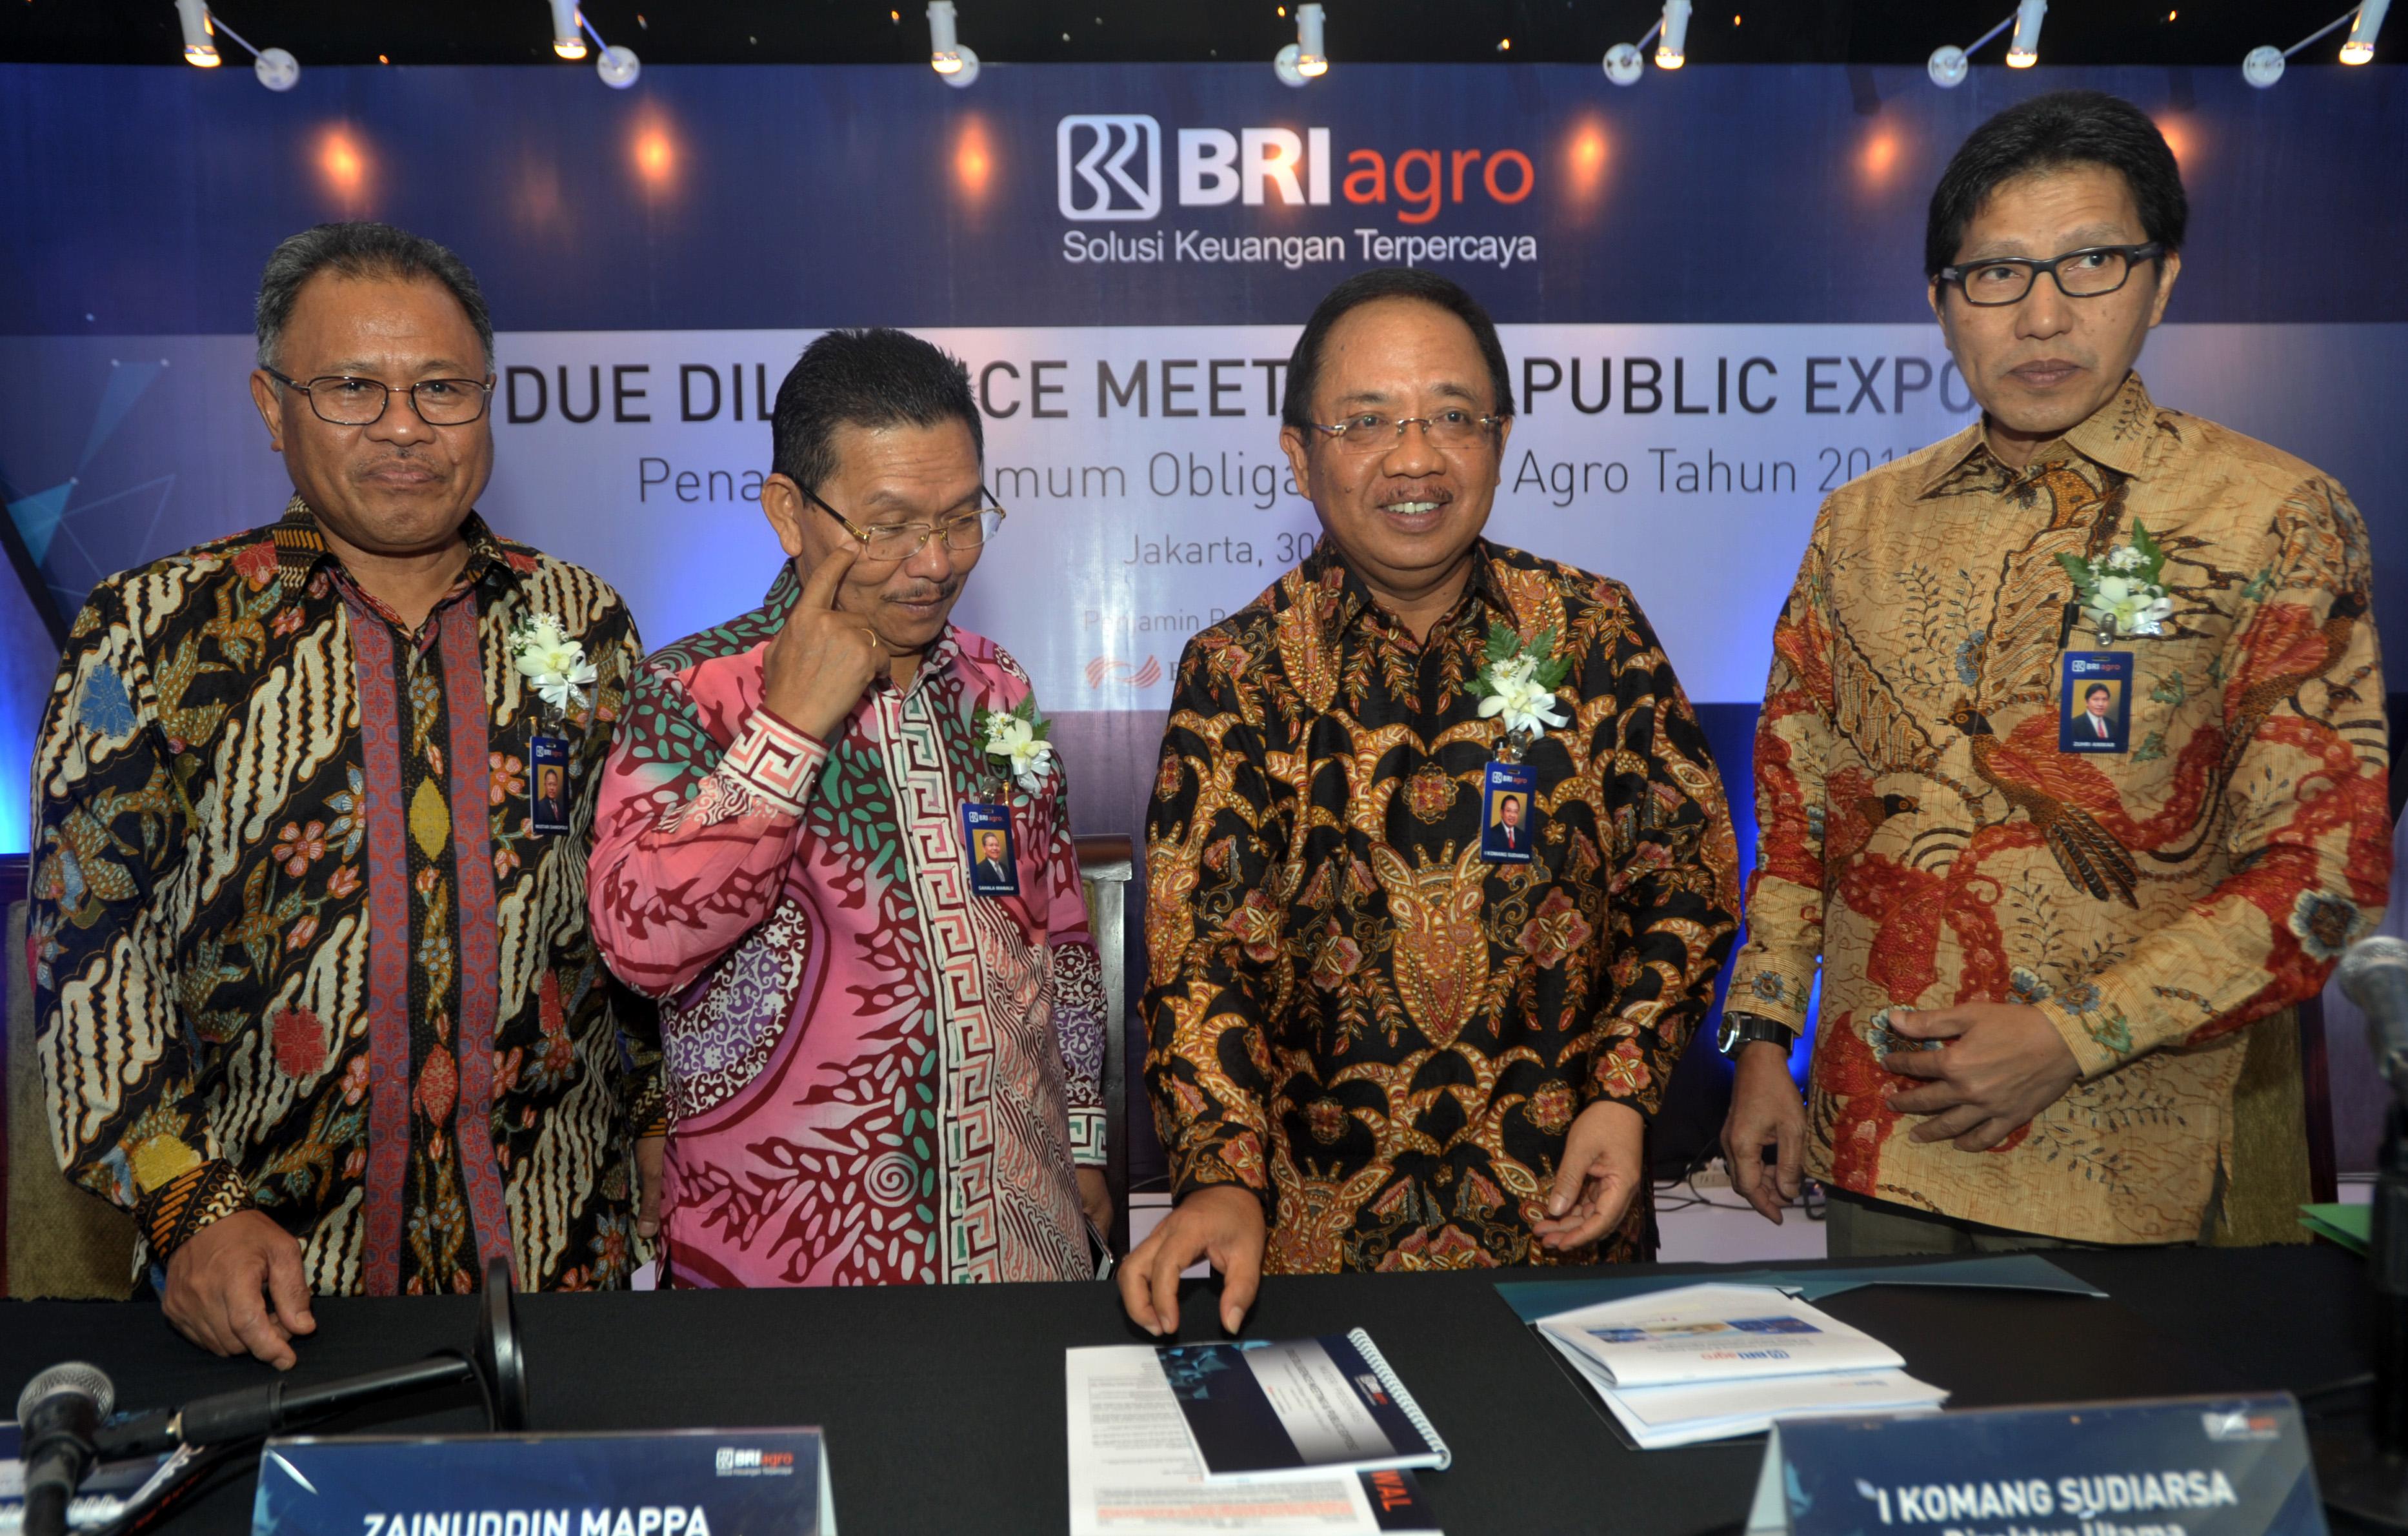 AGRO Jatuh Tempo, Bank Raya Indonesia (AGRO) Lunasi Obligasi Rp239 Miliar